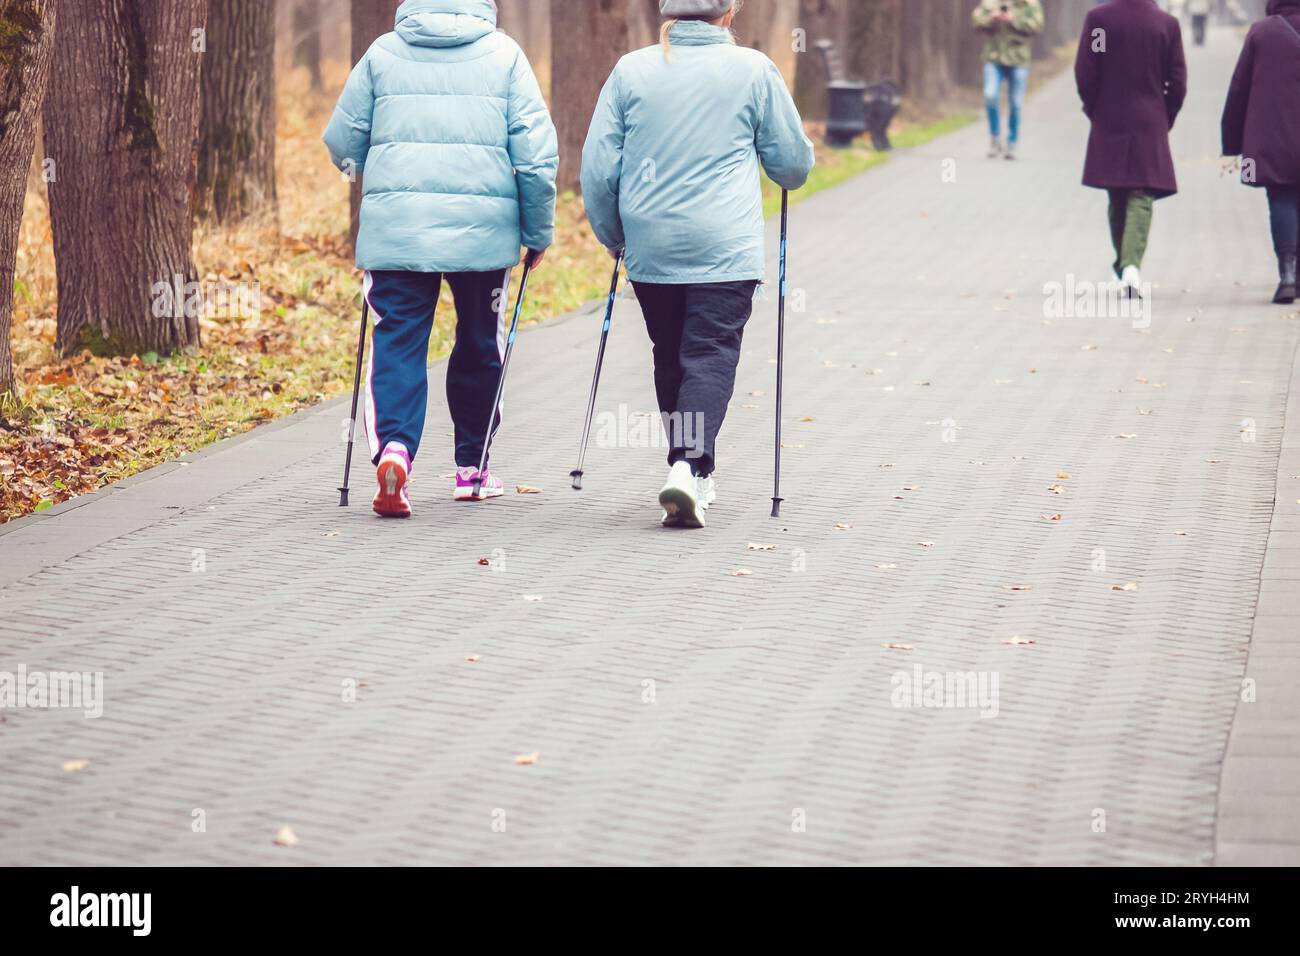 Pole walking in autumn, senior women exercising in public park Stock Photo